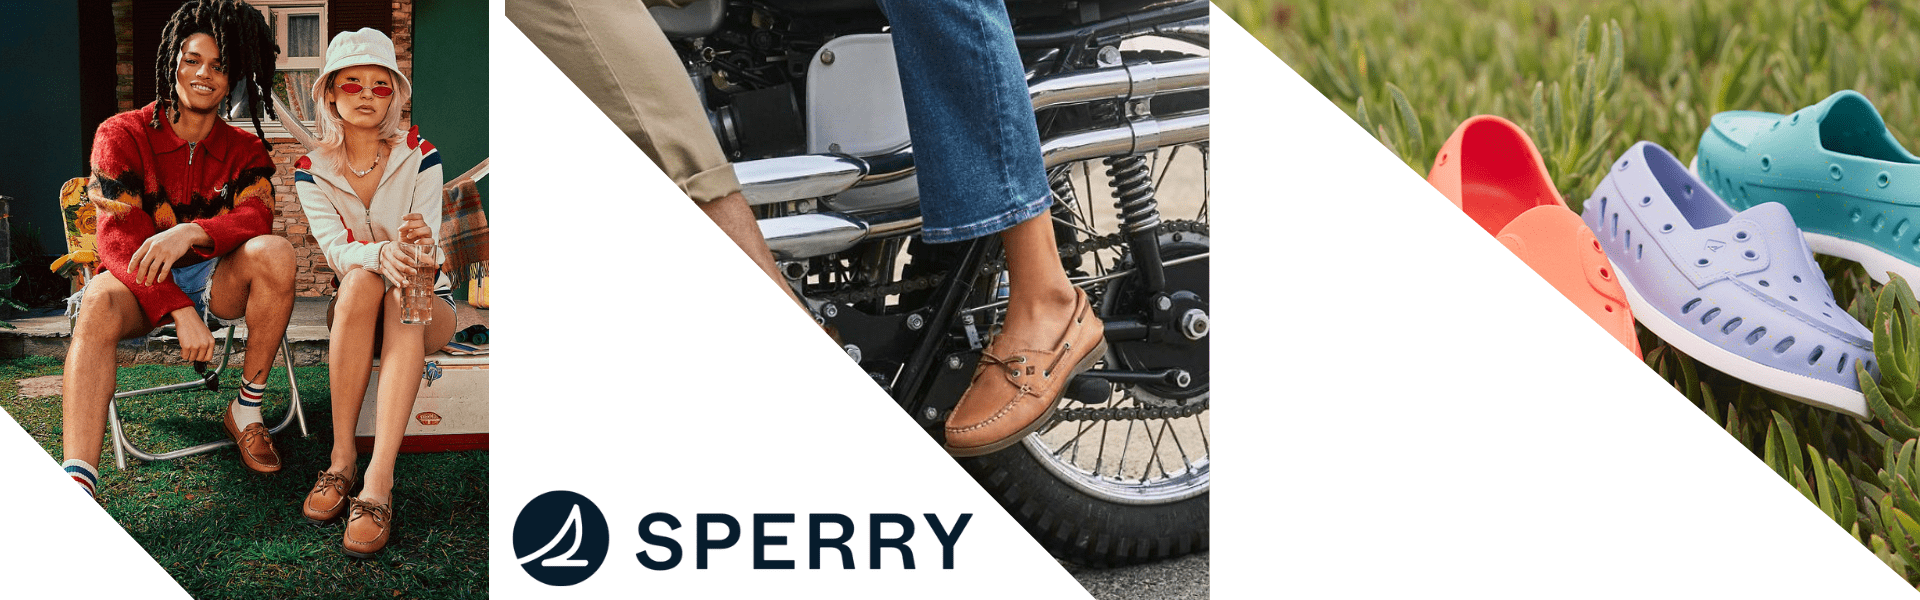 Sperry Footwear - Shoes, boots for Men, Women